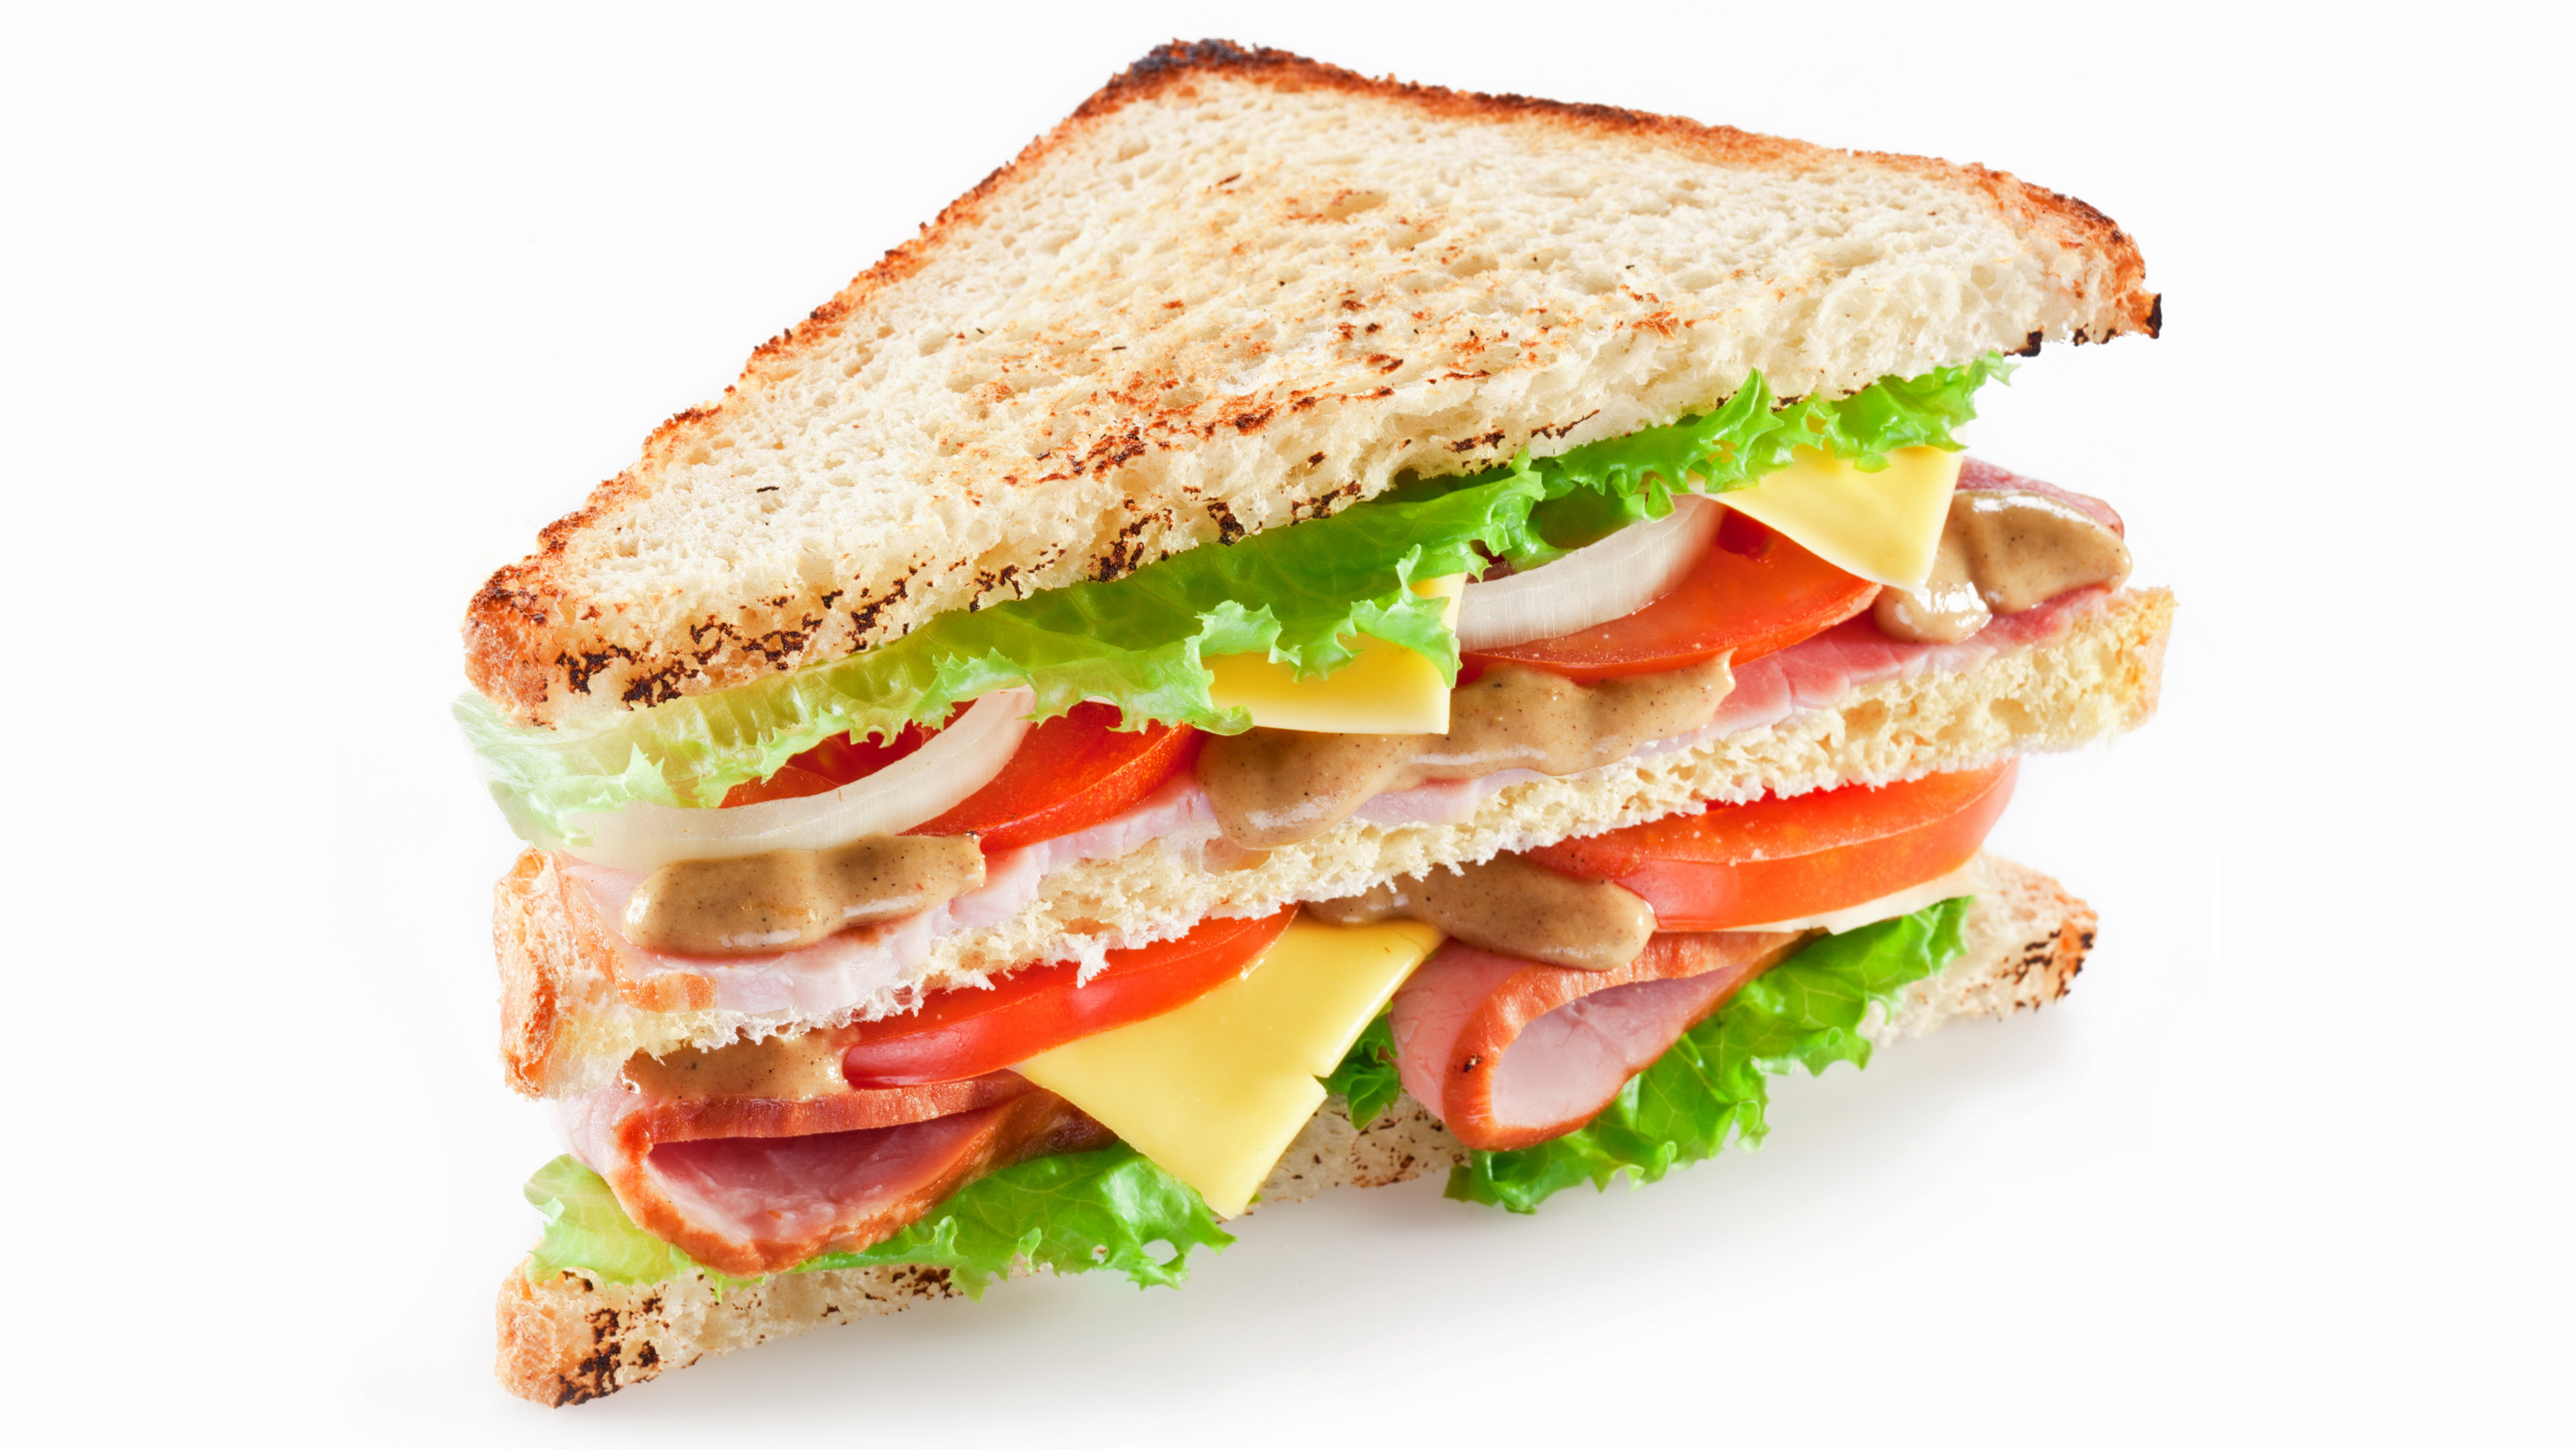 Сэндвич смотрит. Сэндвич. Бутерброд на белом фоне. Сэндвич на белом фоне. Треугольные бутерброды.